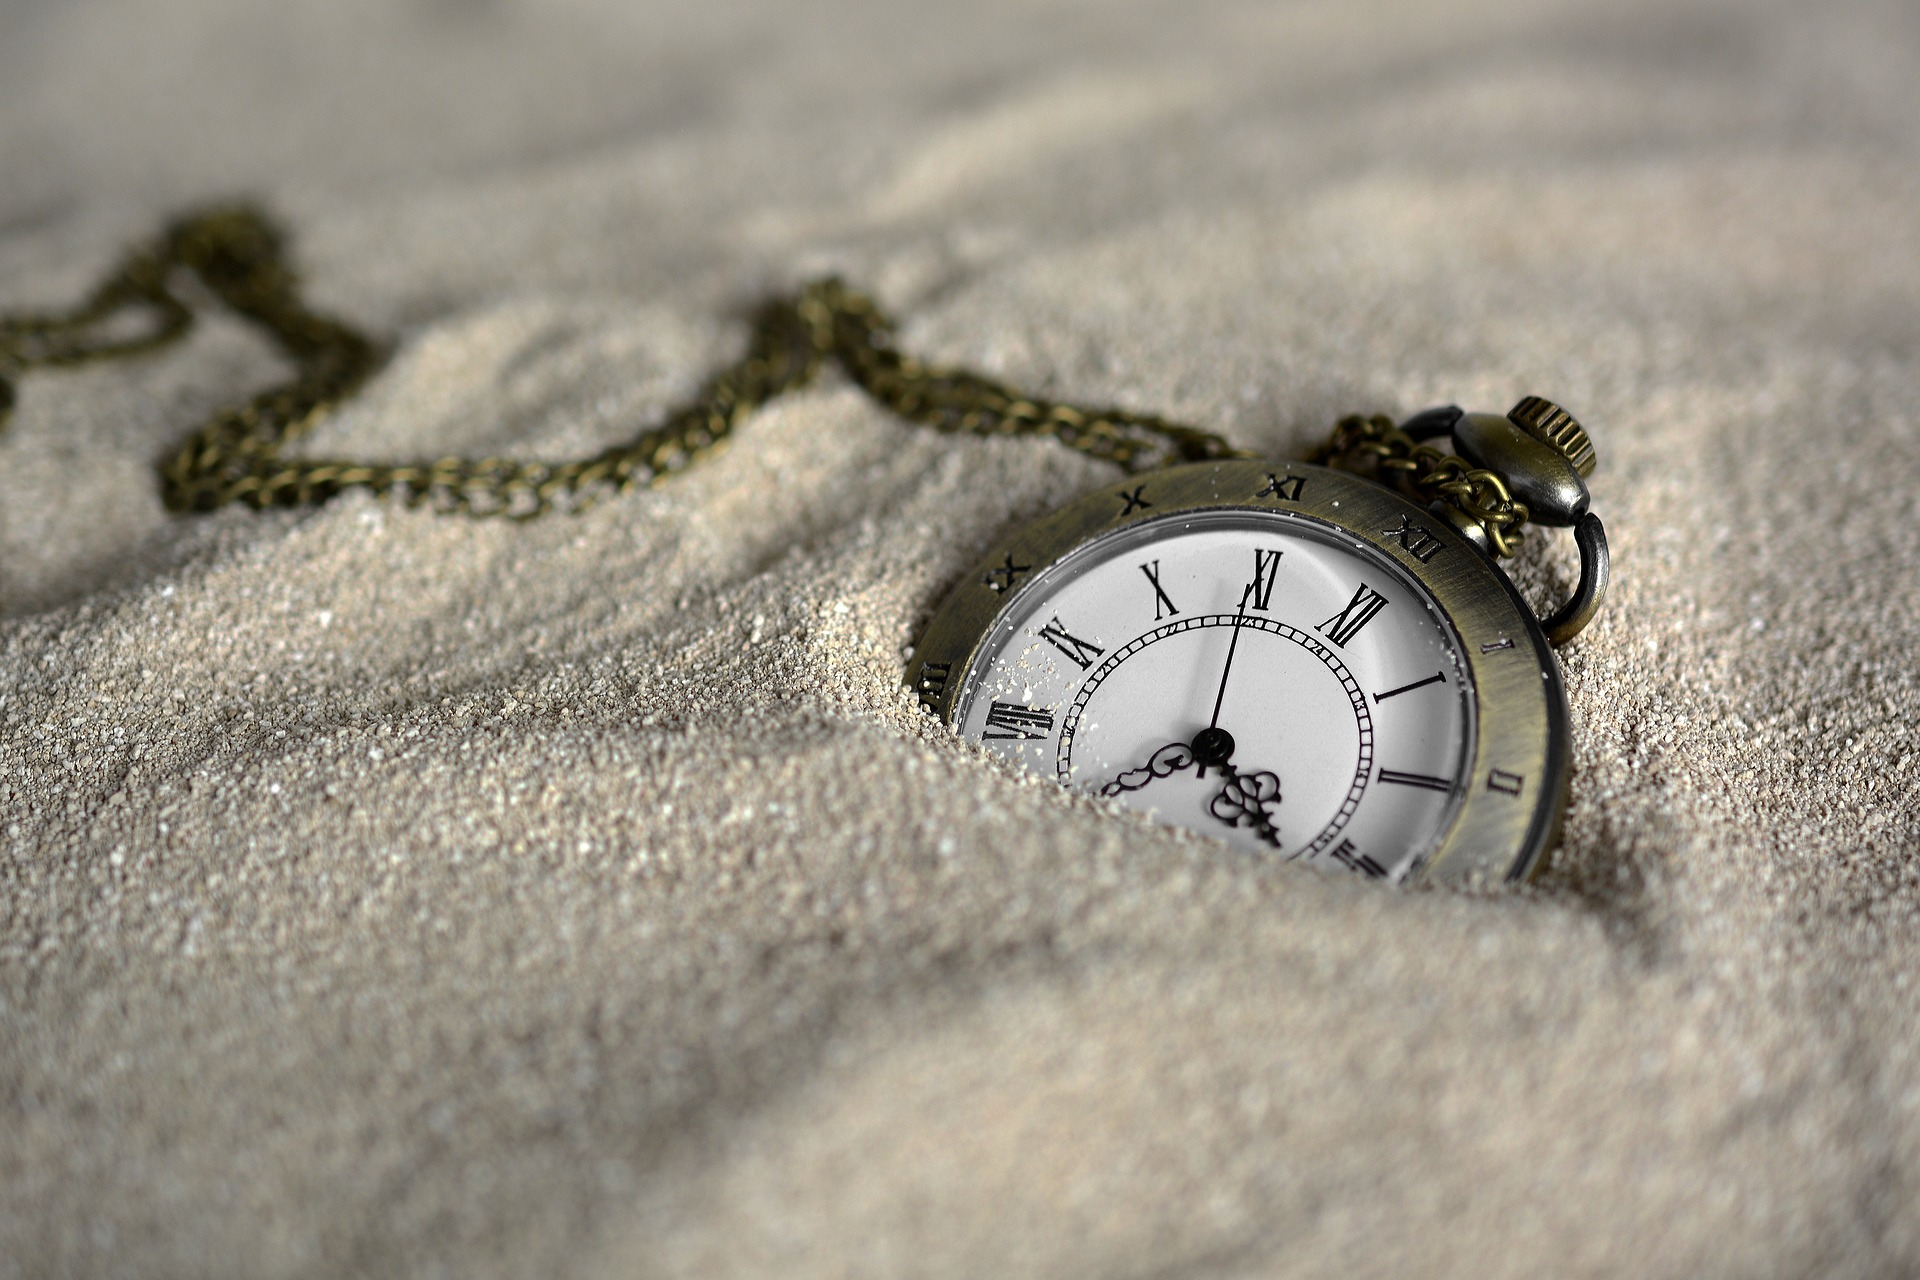 Closeup of a pocketwatch lying on a sandy beach